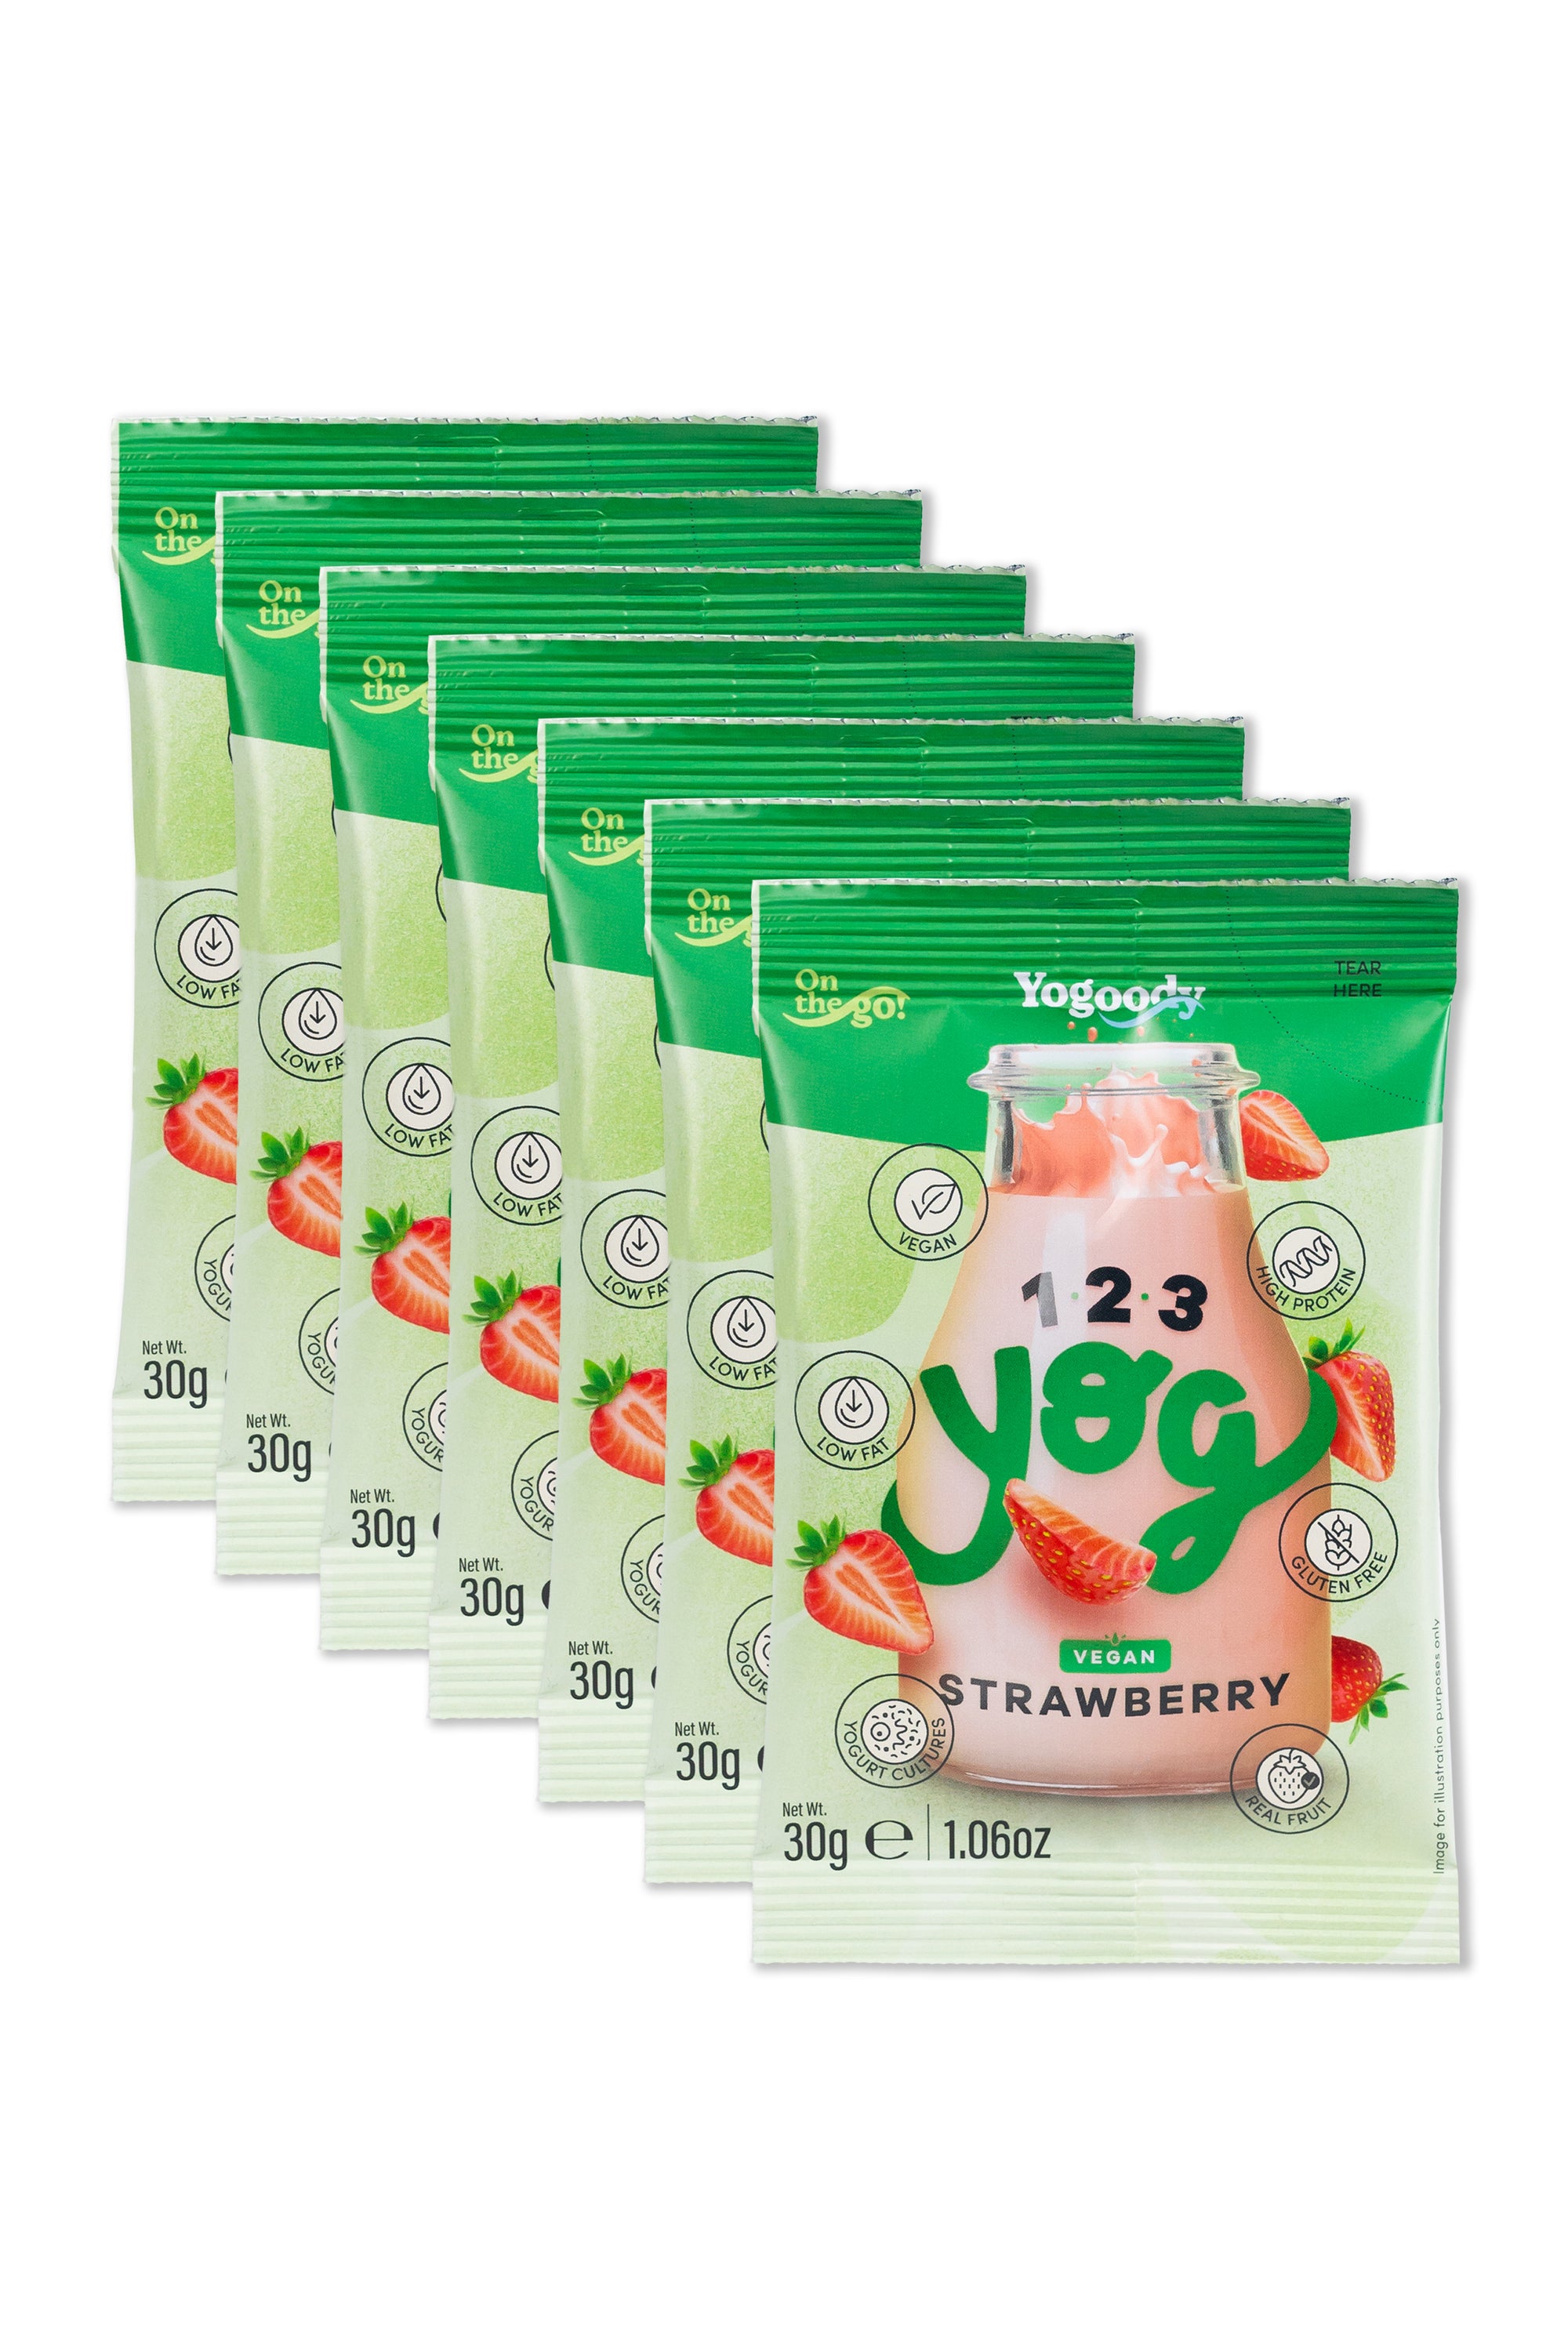 Yogoody 1.2.3.YOG Original, Protein and Vegan x 7 units